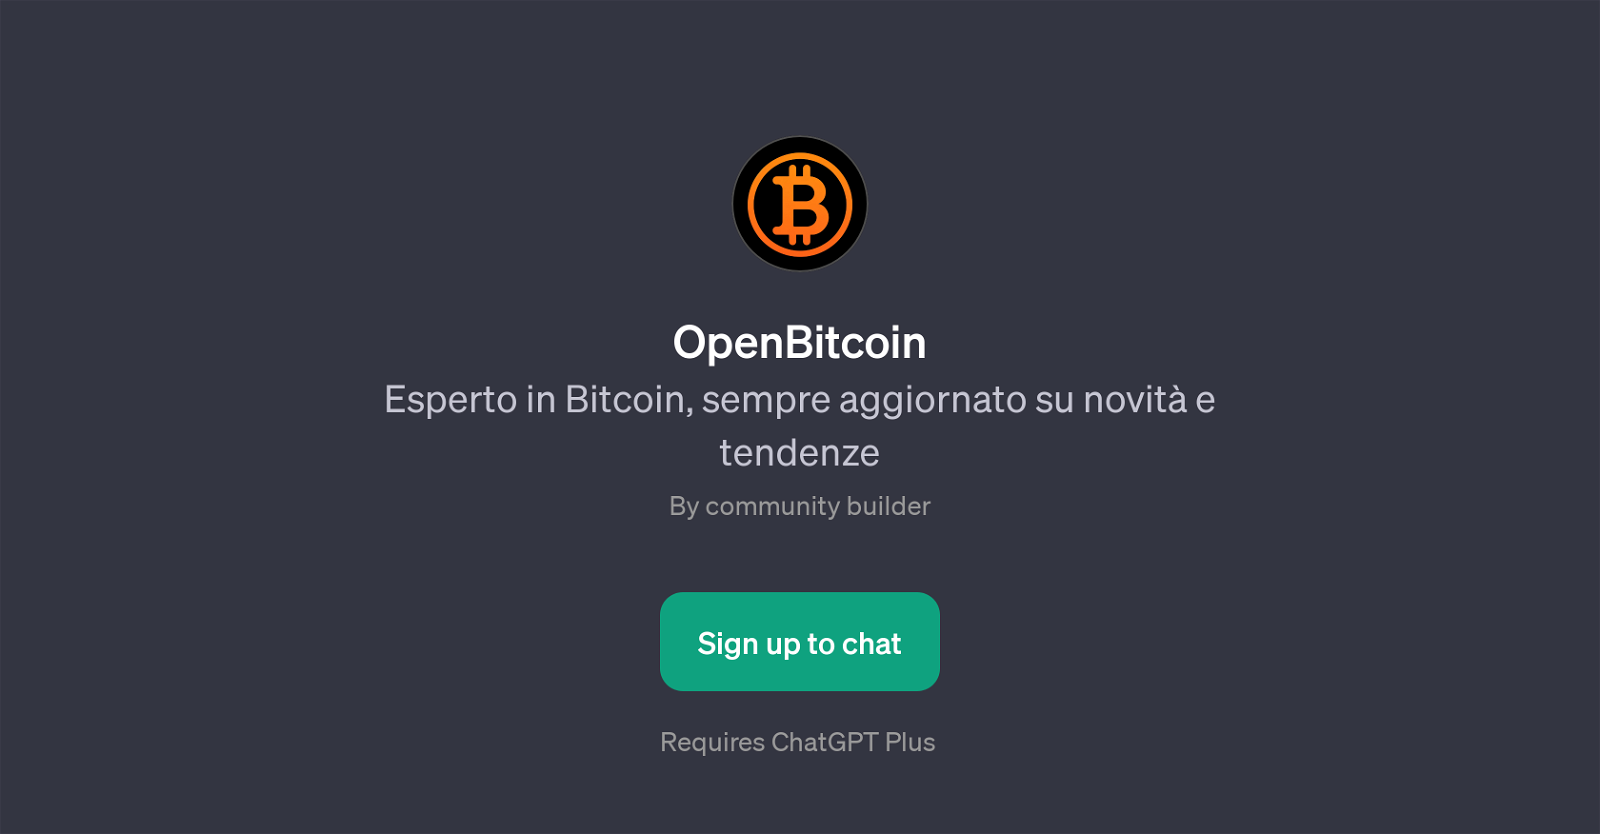 OpenBitcoin website